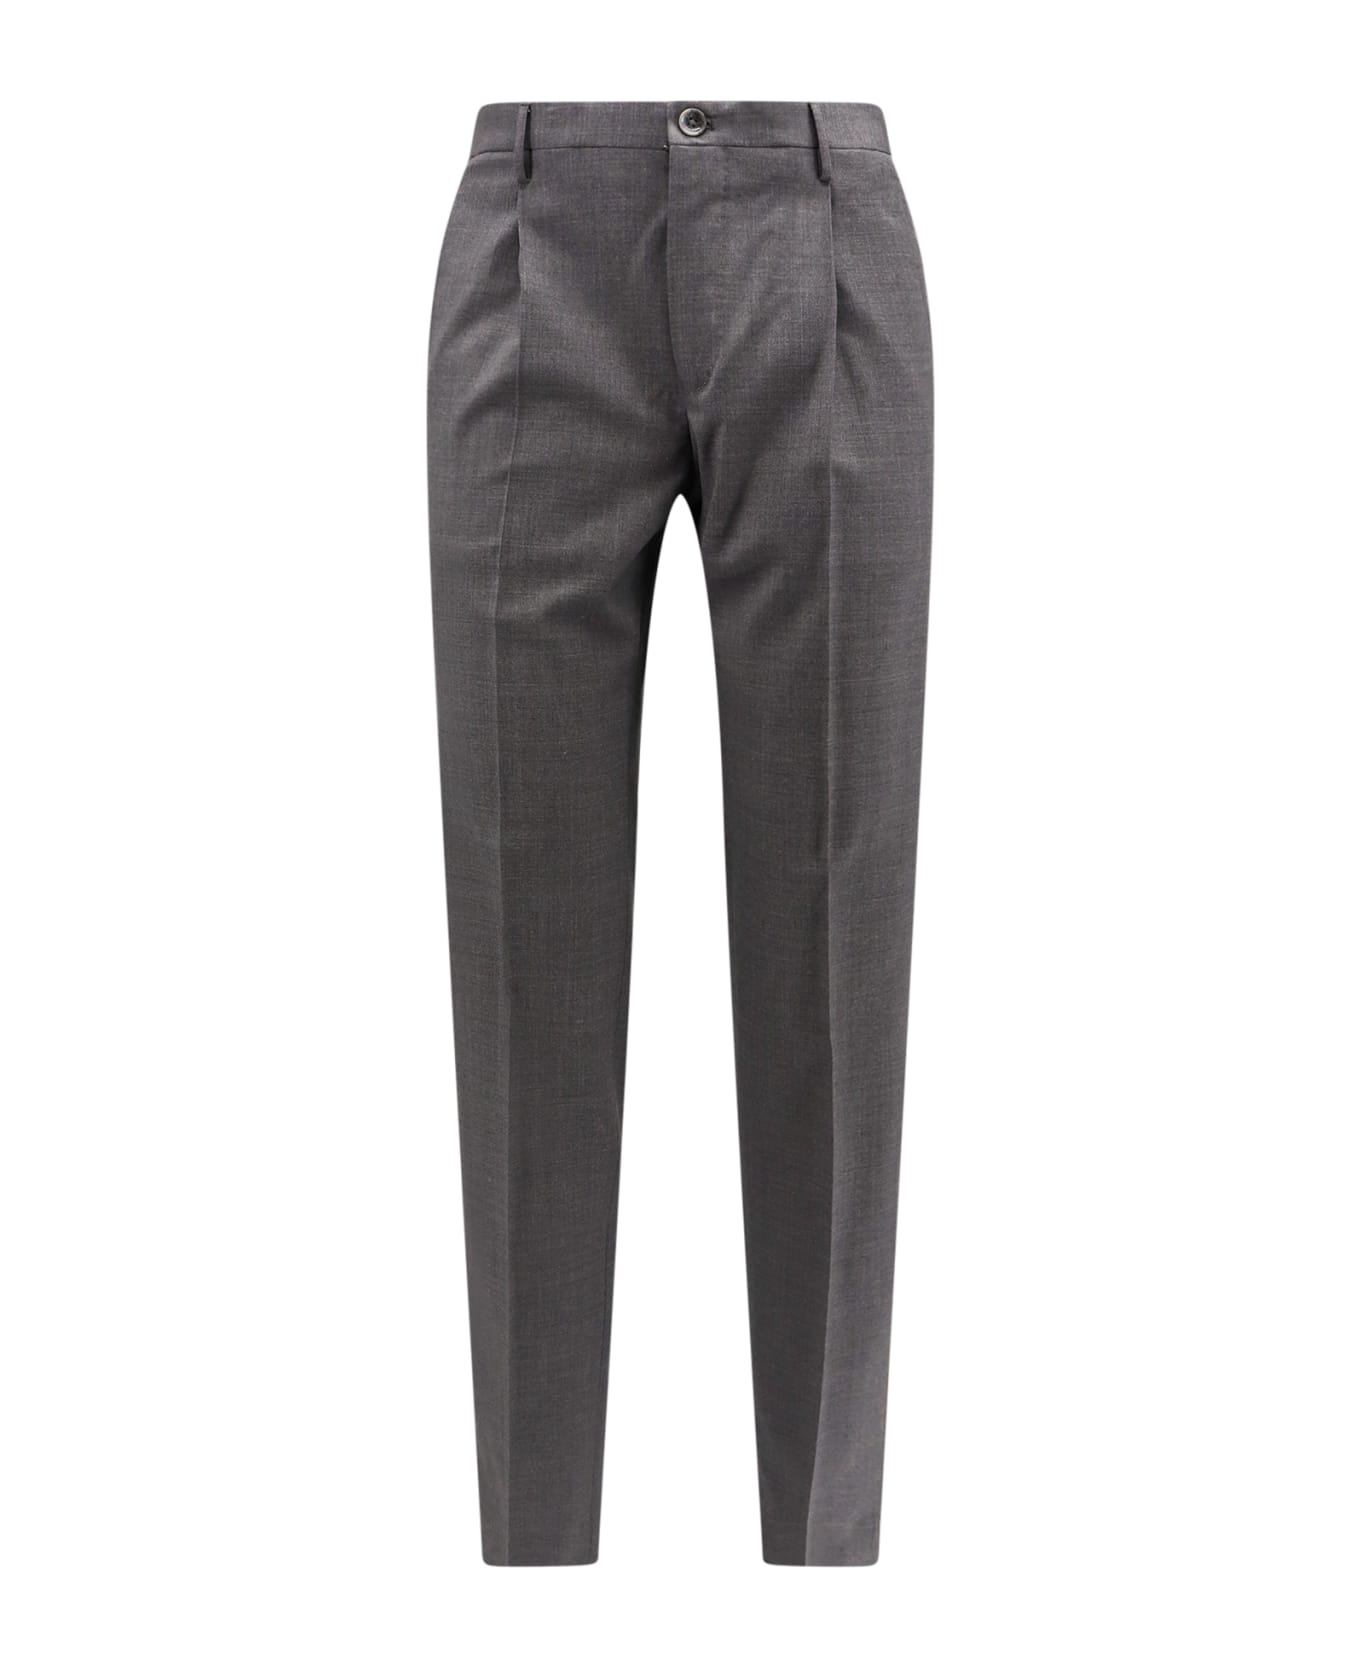 Incotex 54 Trouser - Grey